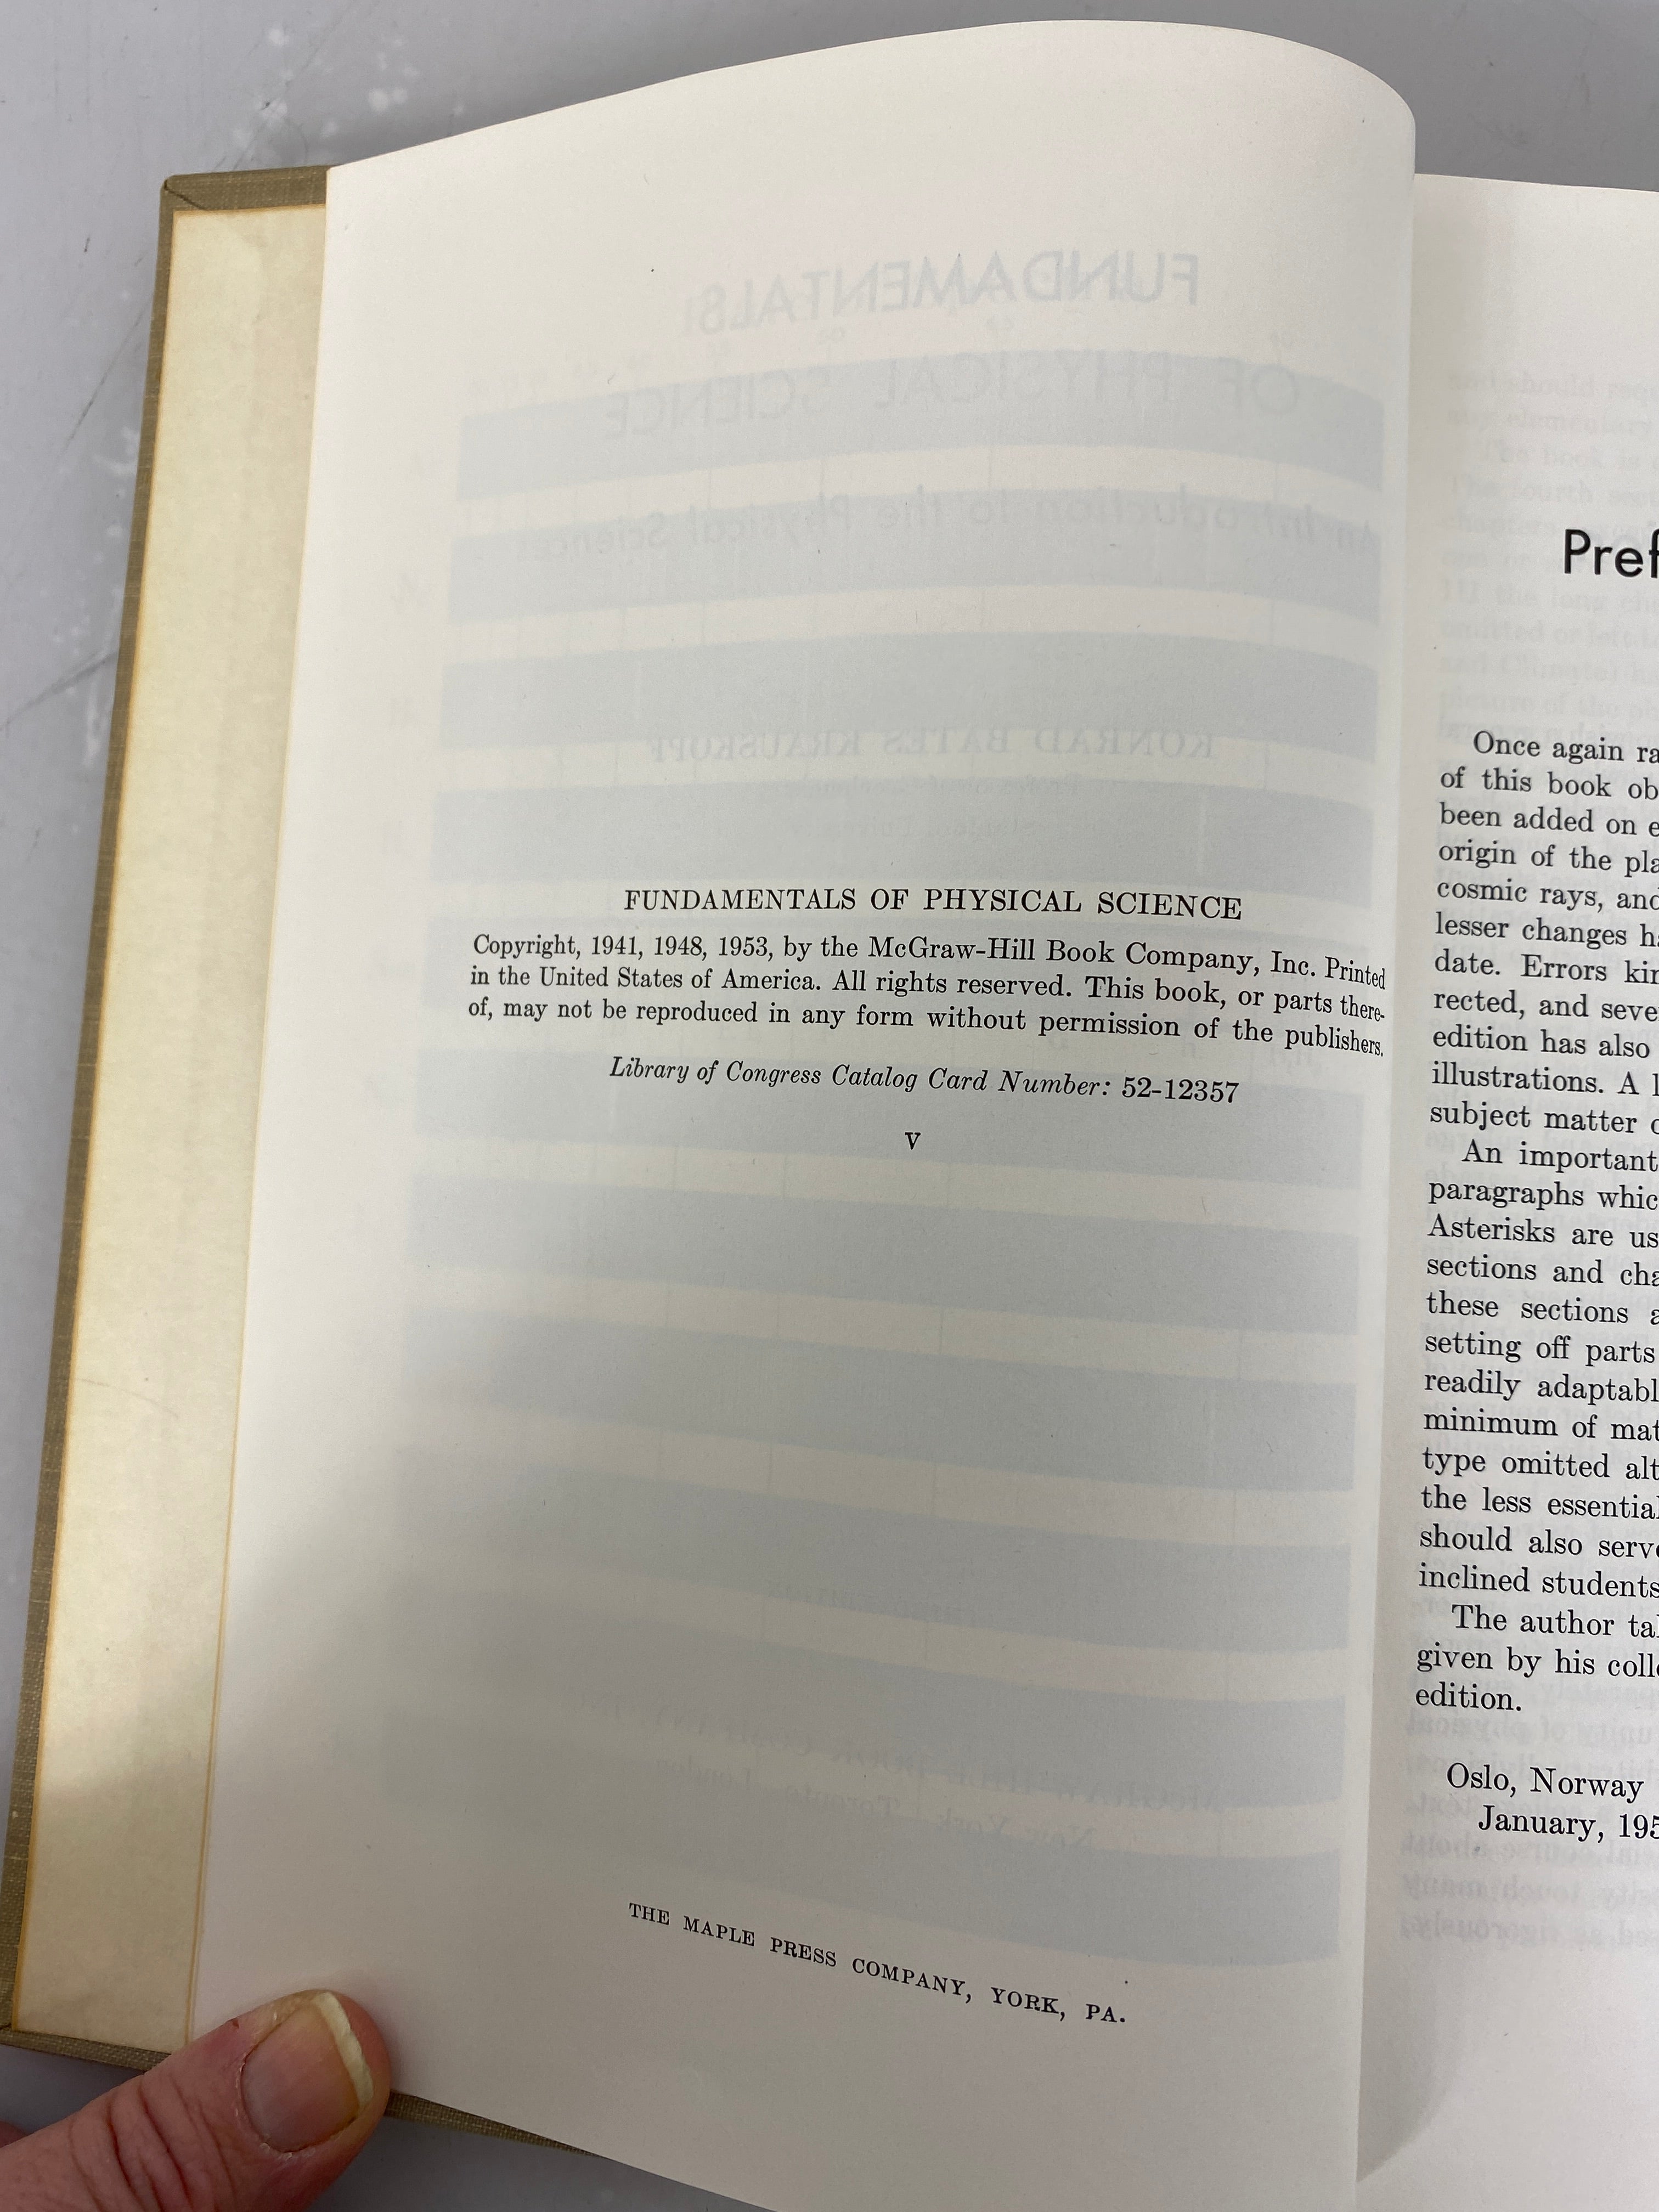 Fundamentals of Physical Science Konrad Krauskopf Third Edition 1953